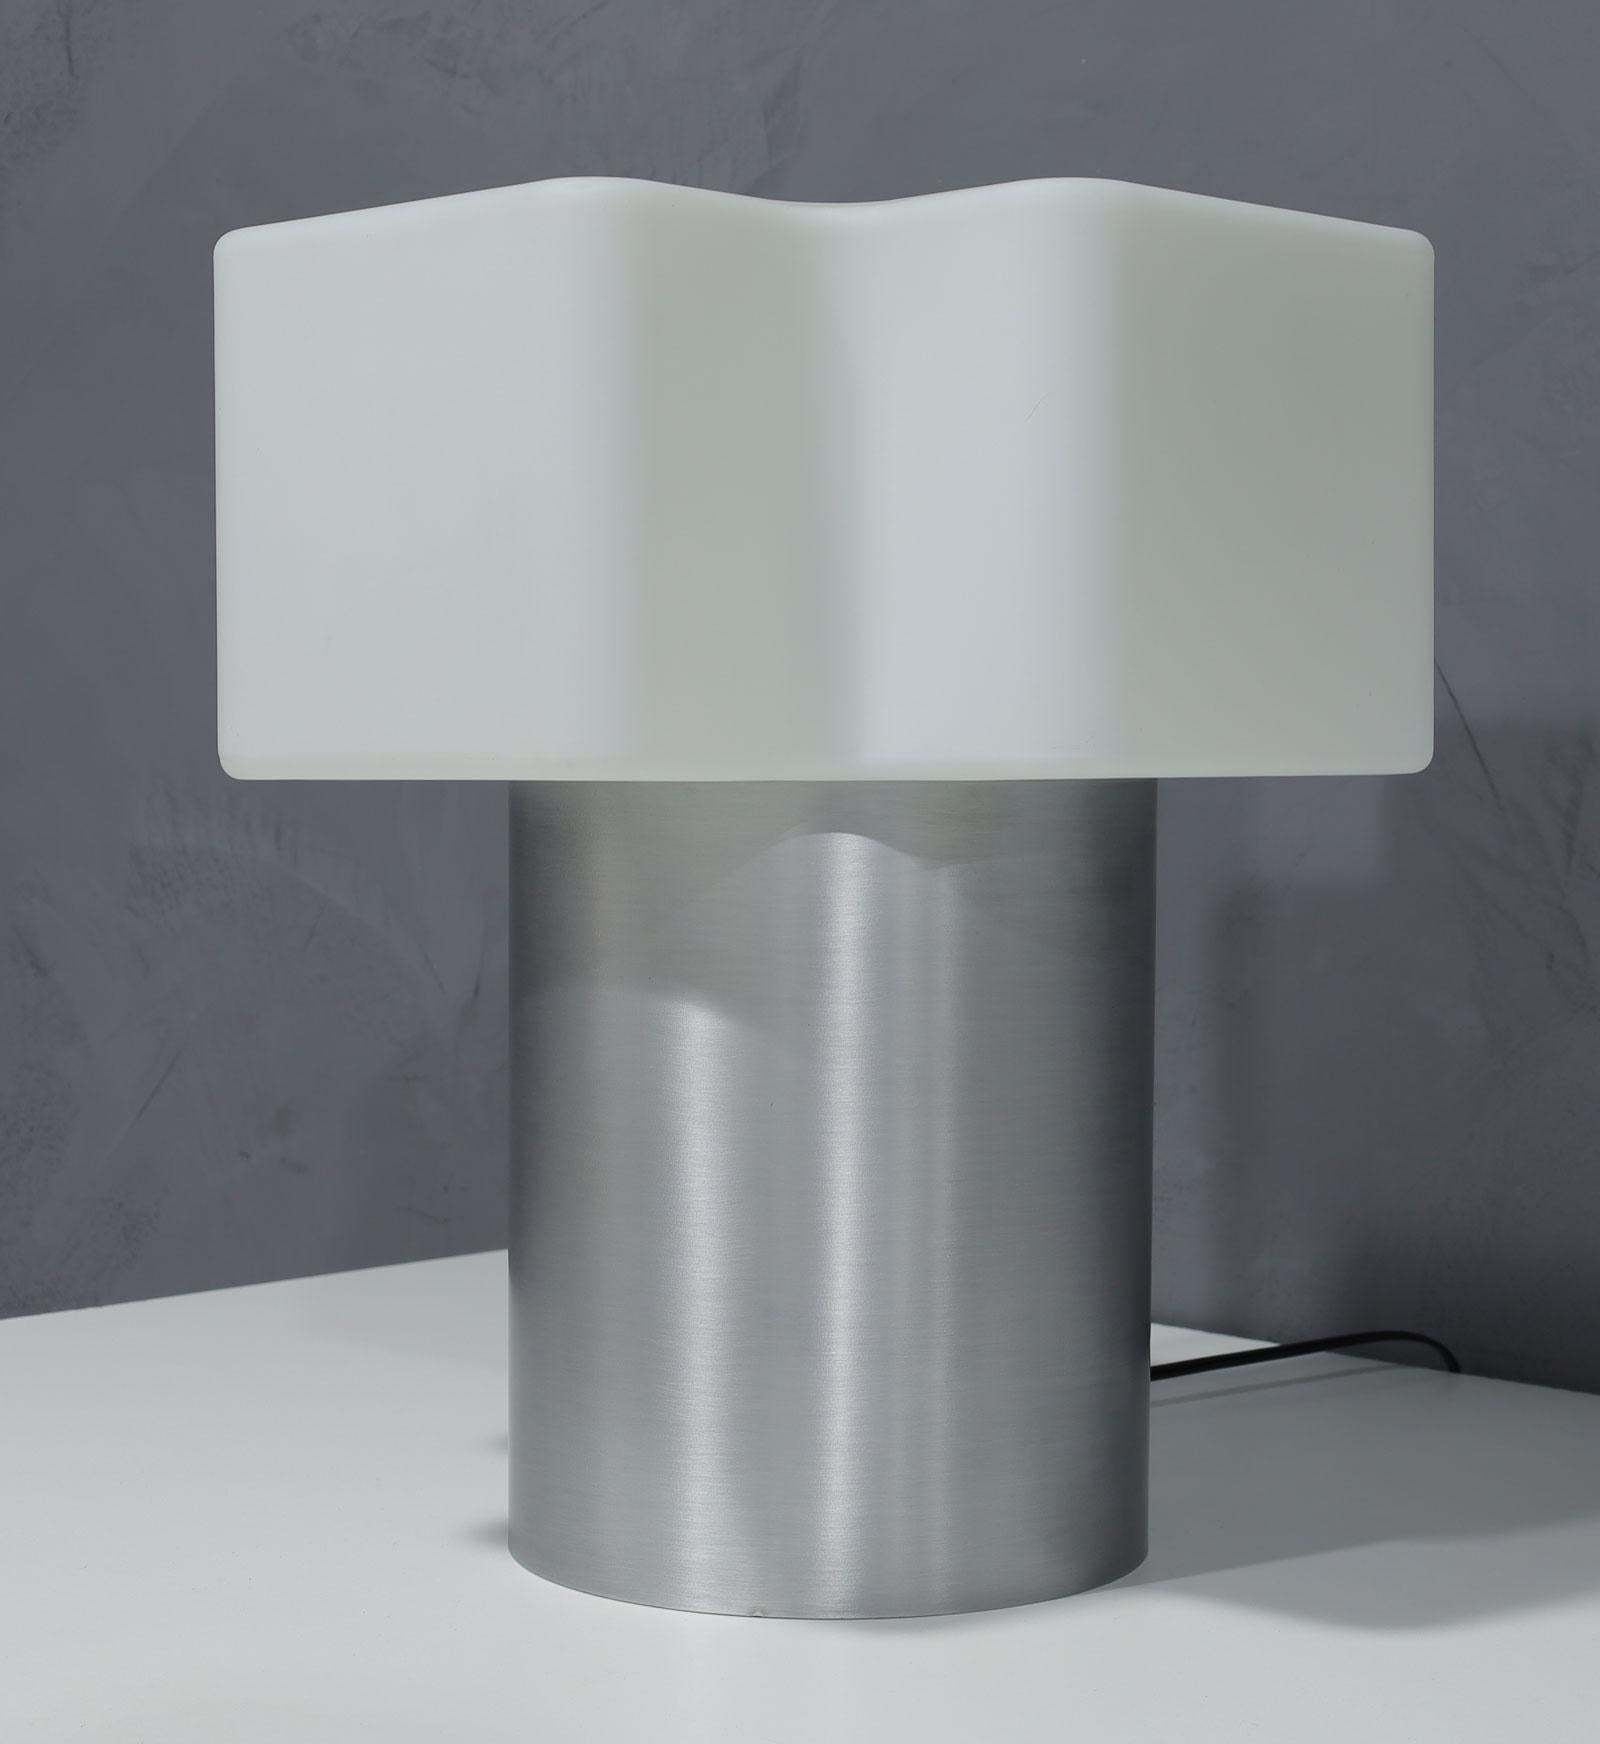 Aluminium Lampe de bureau italienne en verre et aluminium fabriquée en Italie en vente